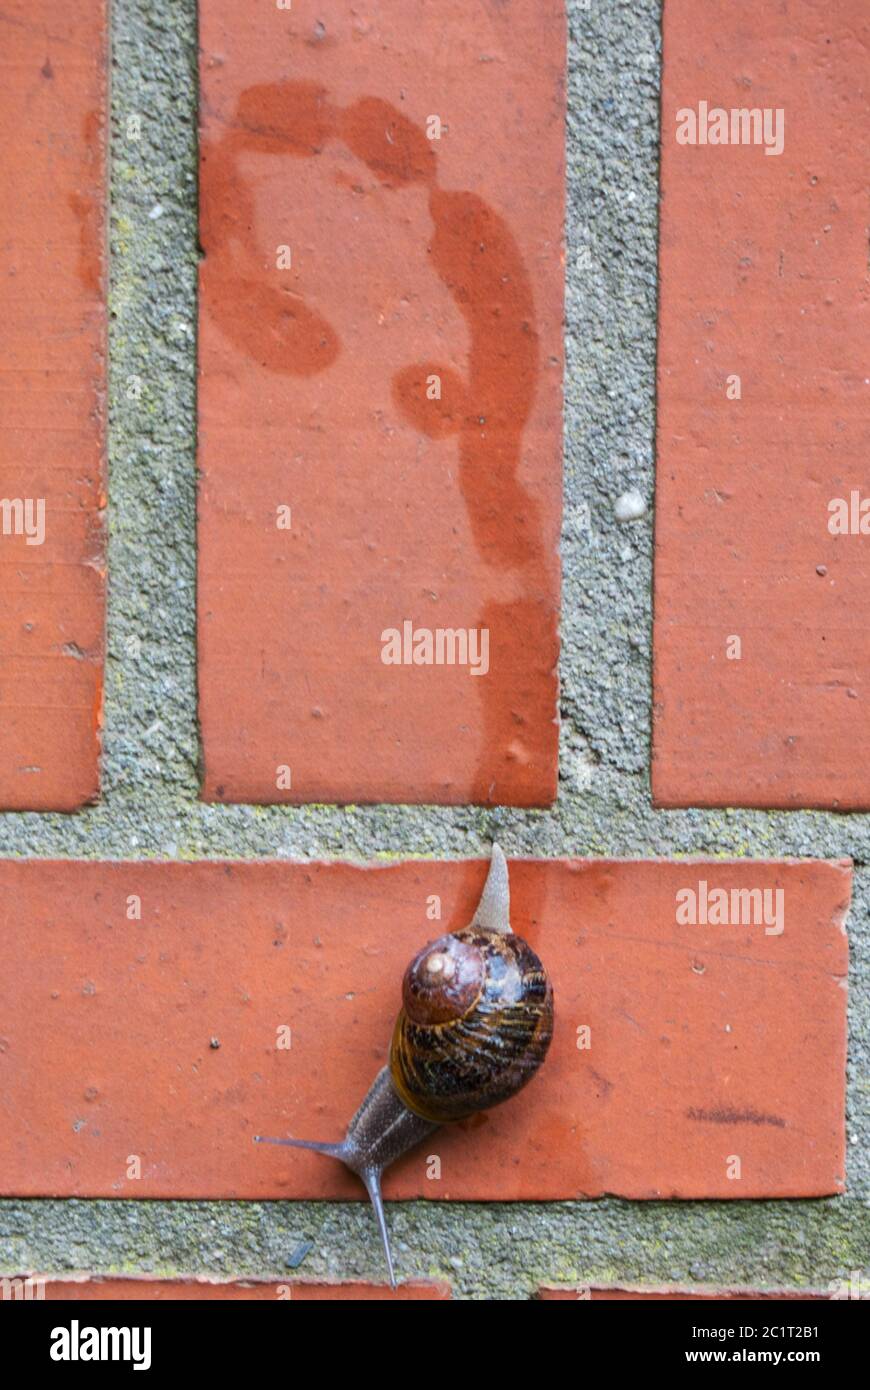 Garden snail, Cornu aspersum, on red brick wall, leaving a slimy trail Stock Photo